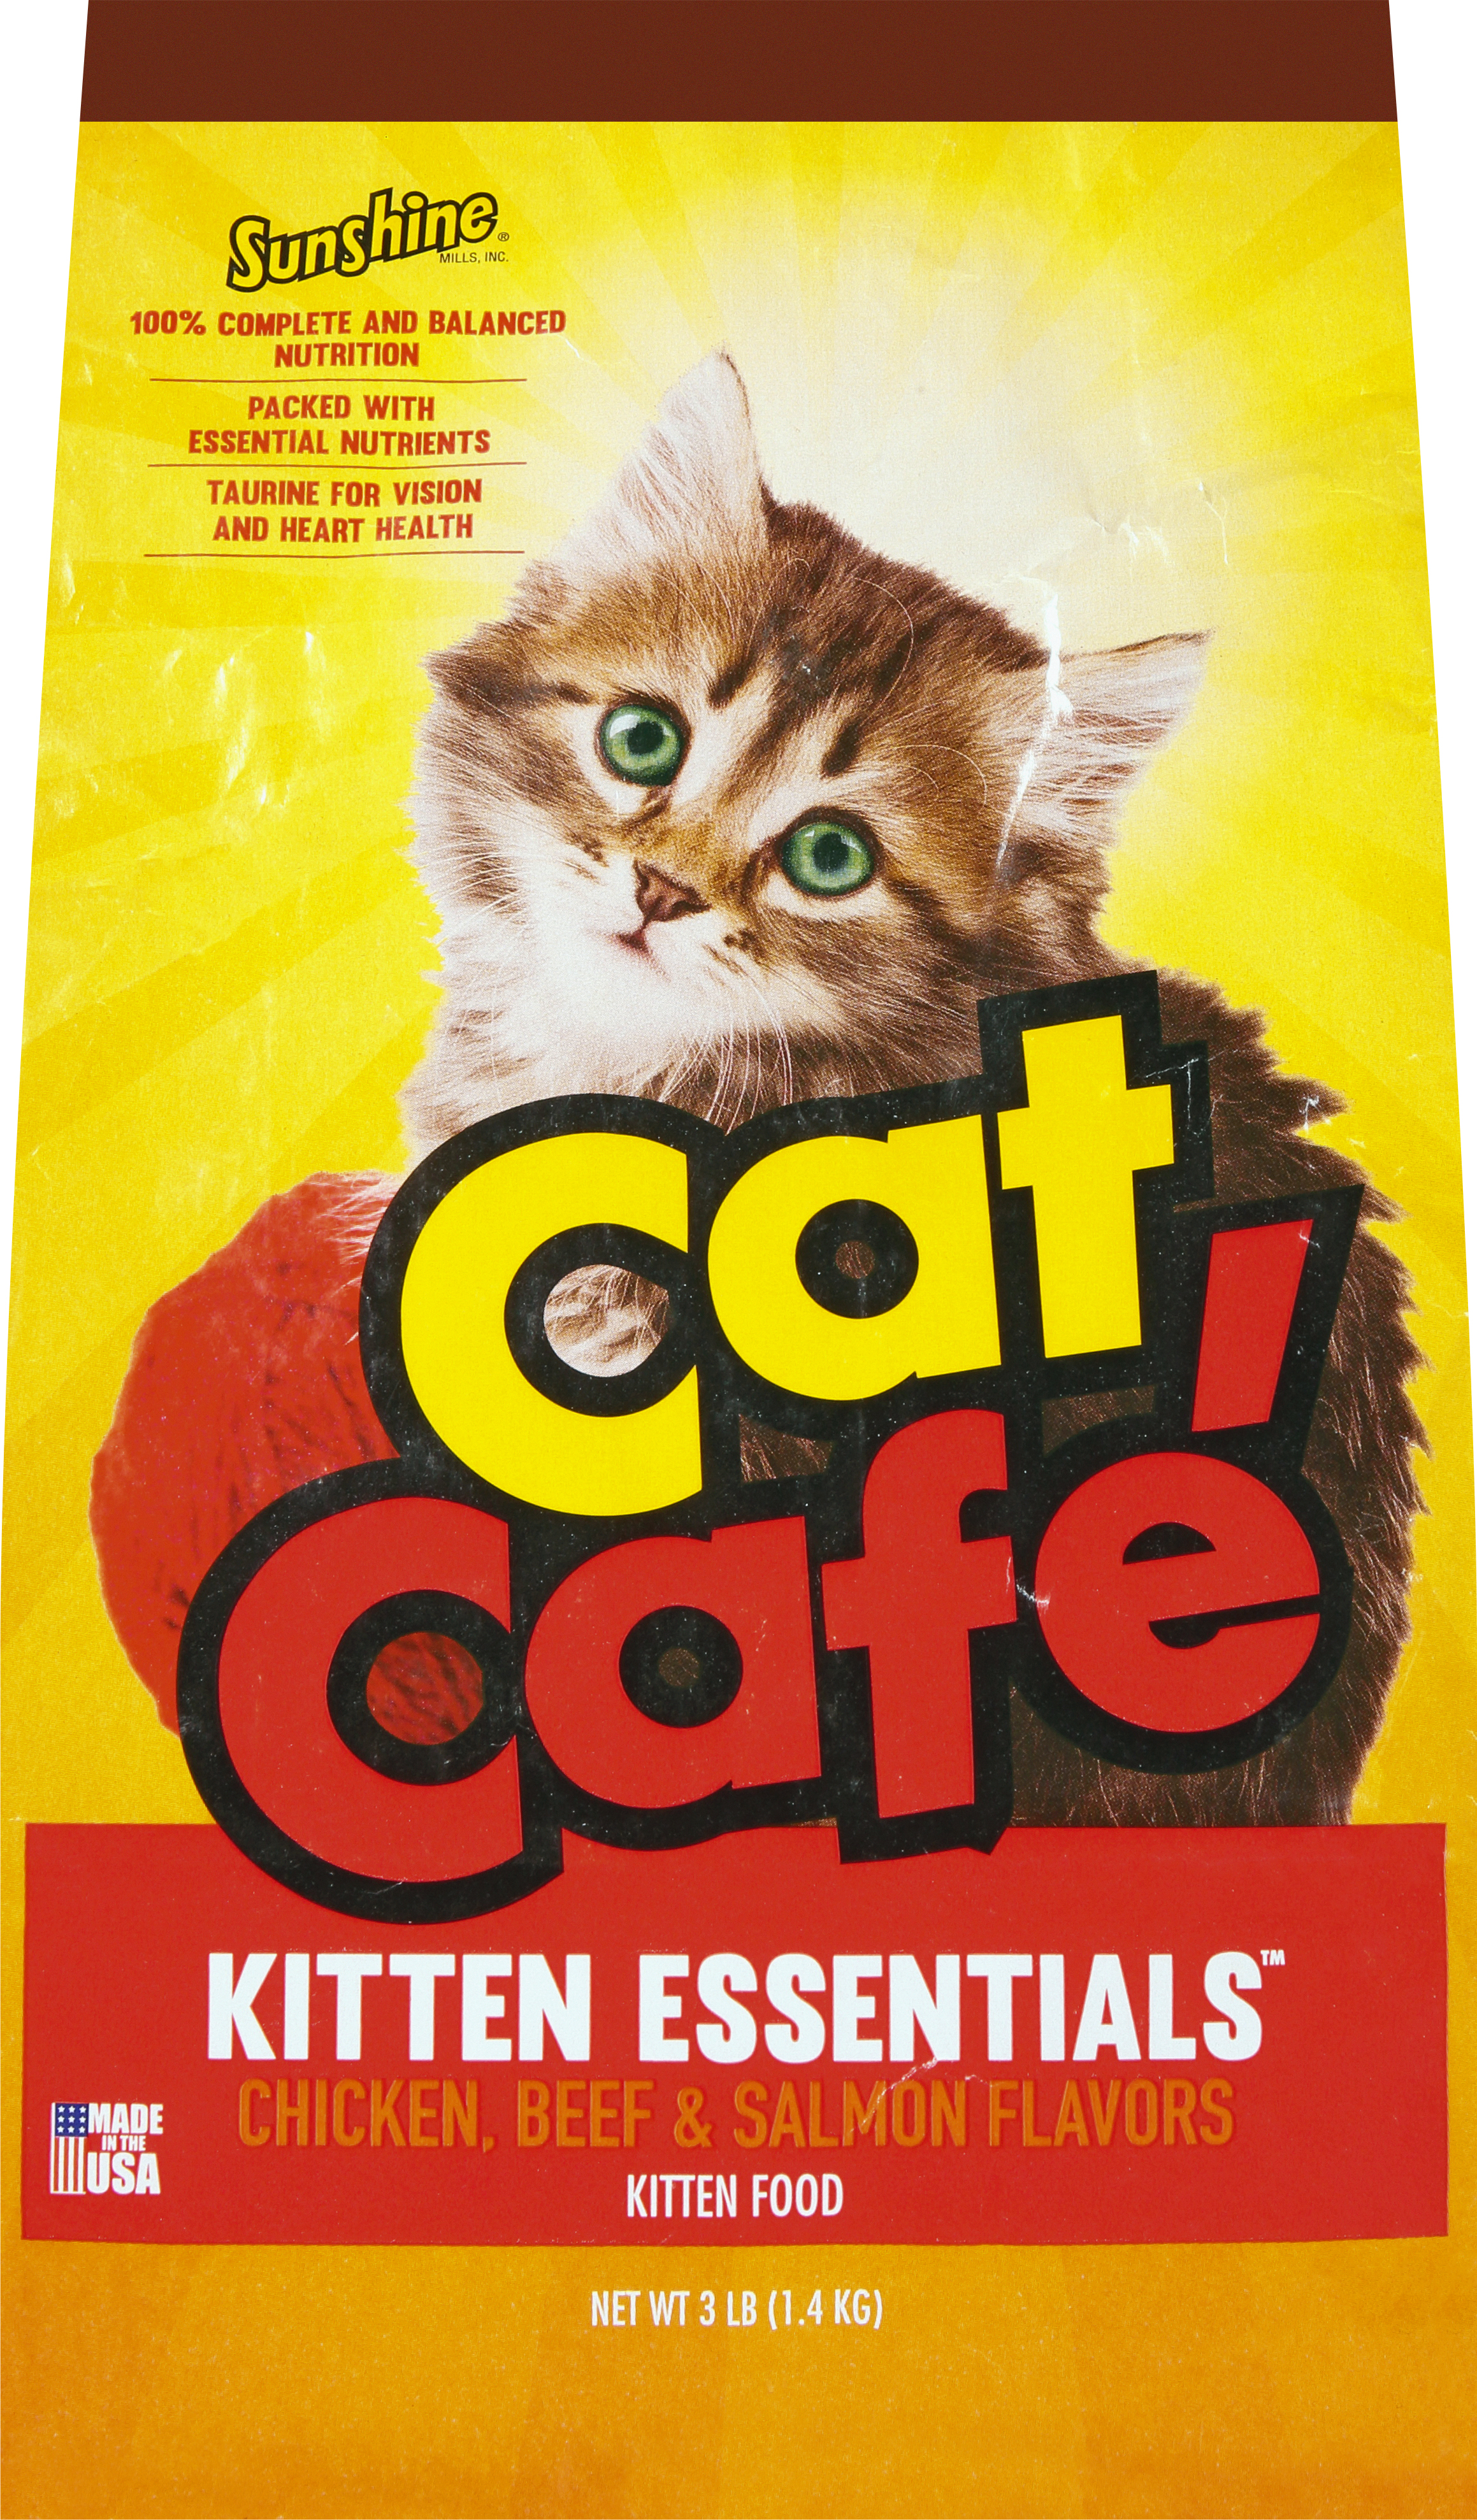 Cat Cafe Kitten Essentials Chicken, Beef & Salmon Flavors Kitten Food 3 lb